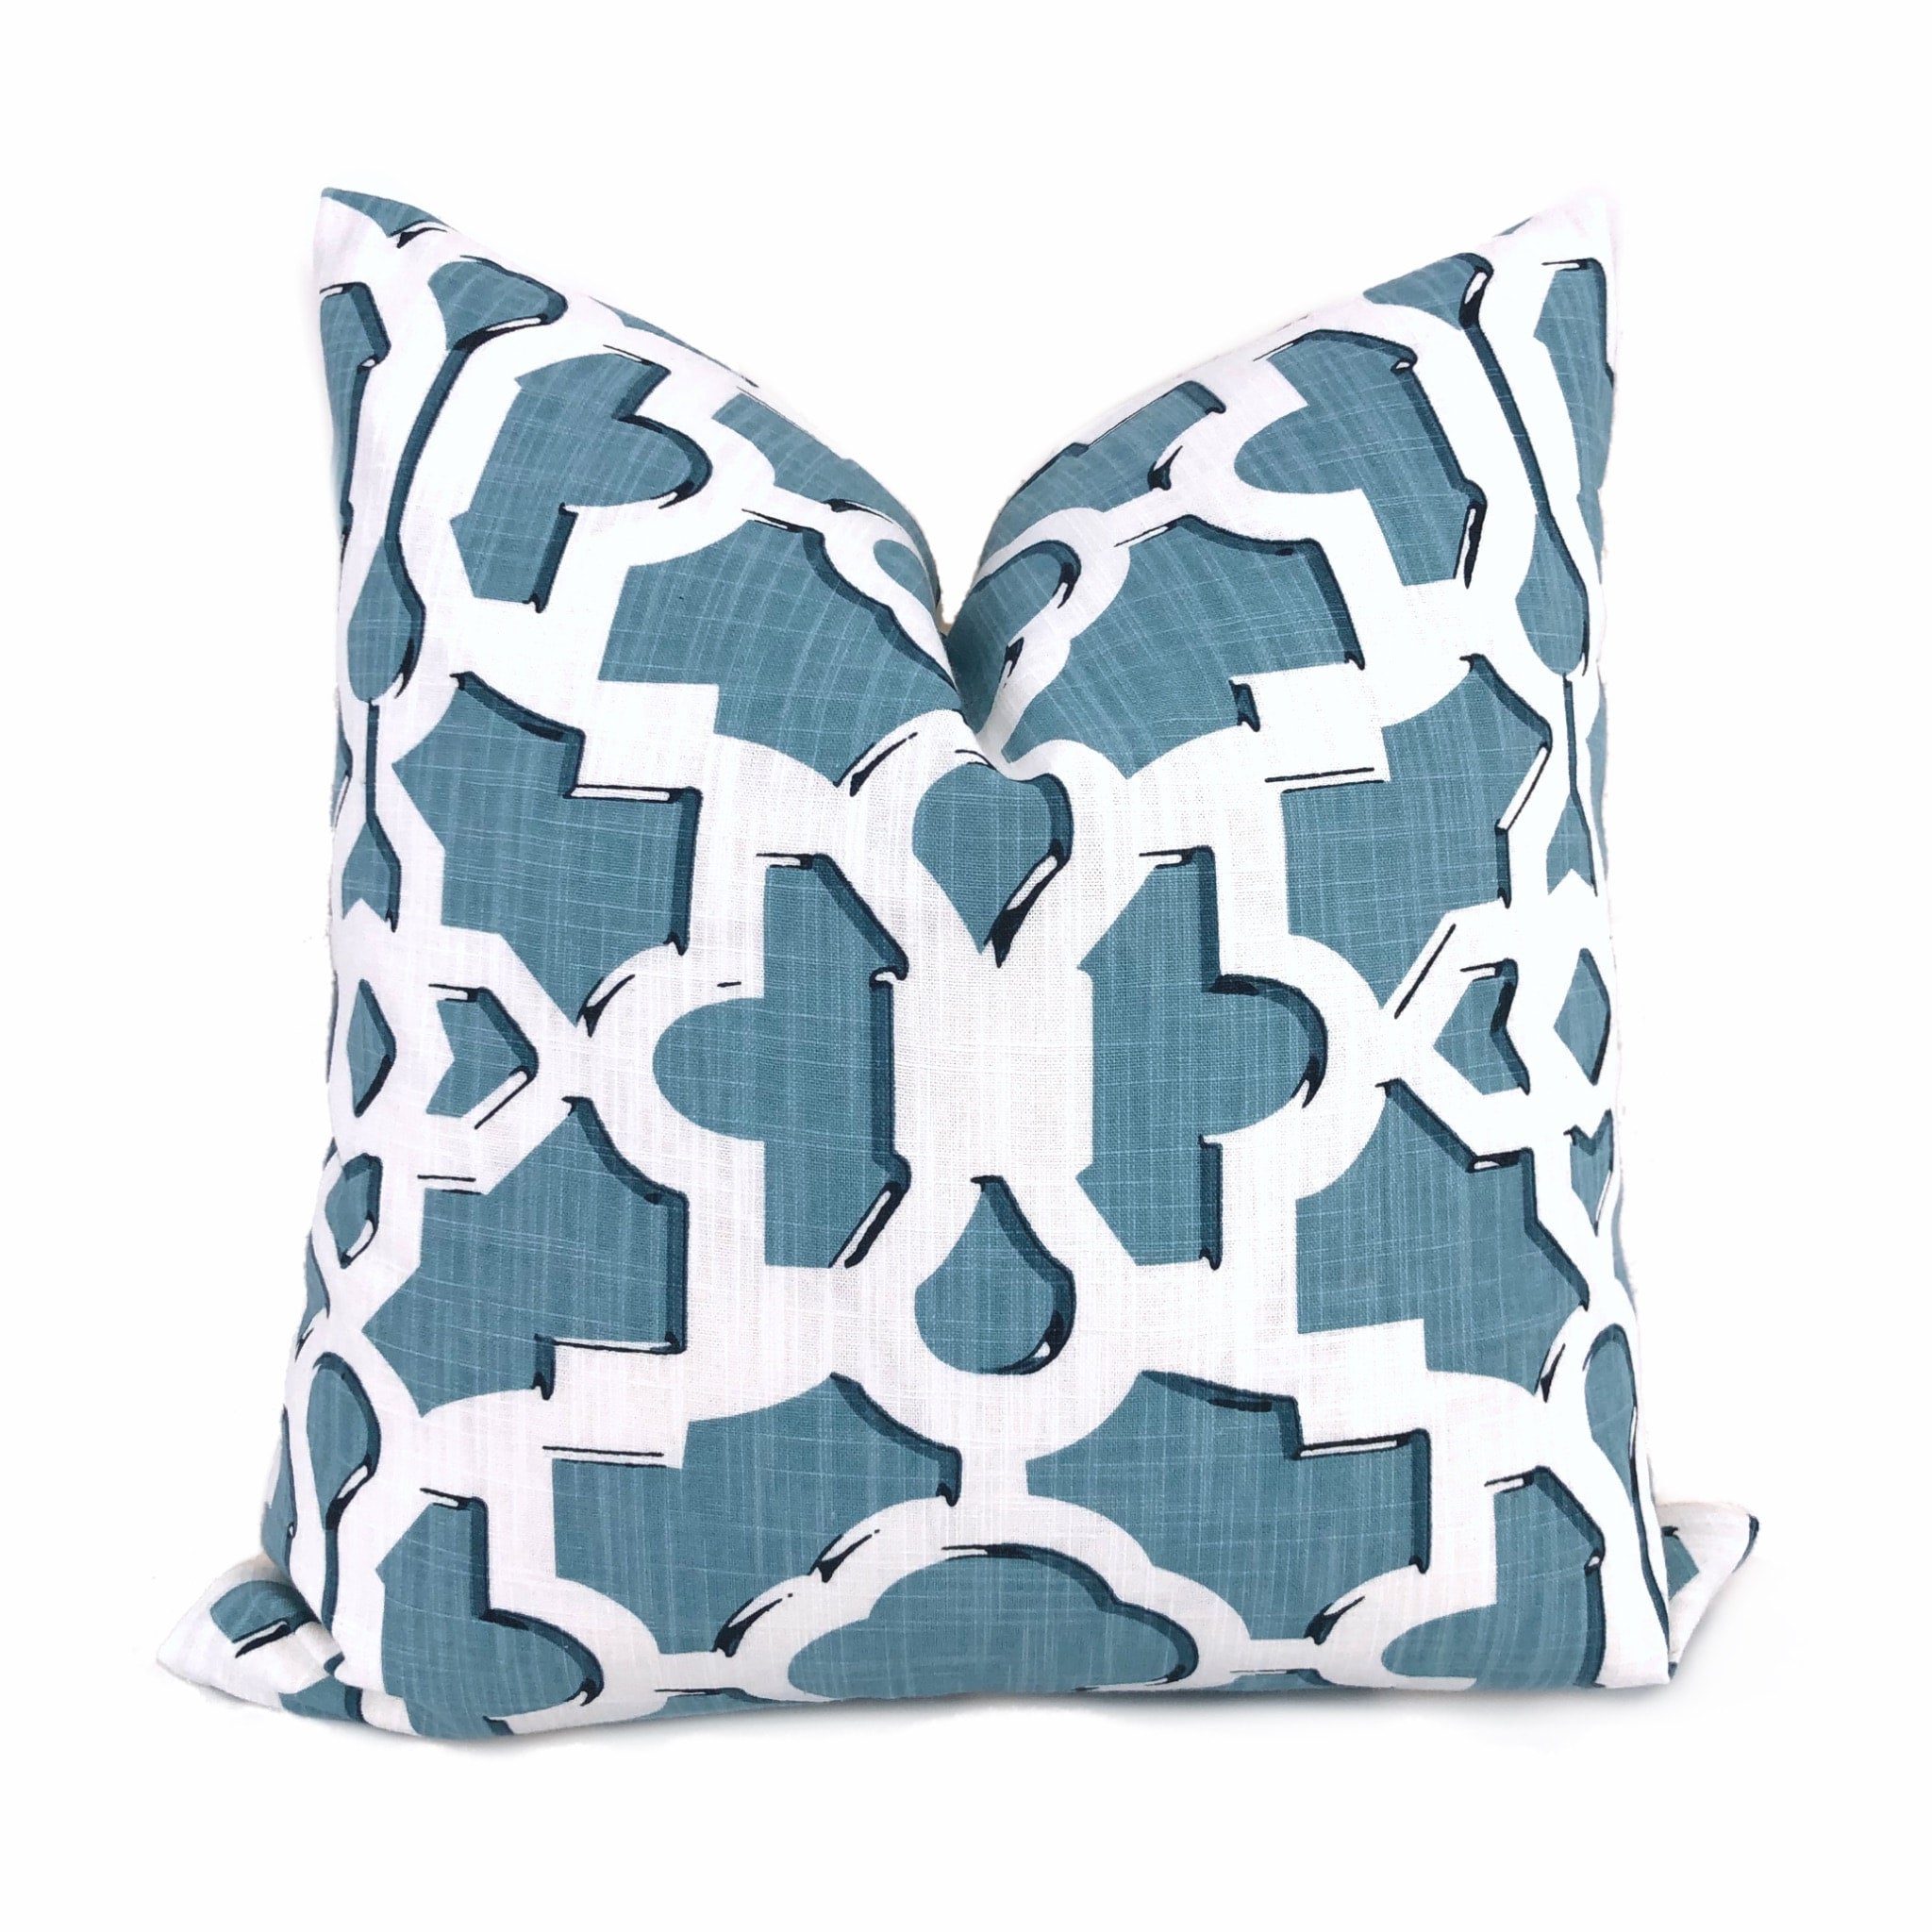 Artega Sky Blue White Lattice Fretwork Pillow Cover by Aloriam